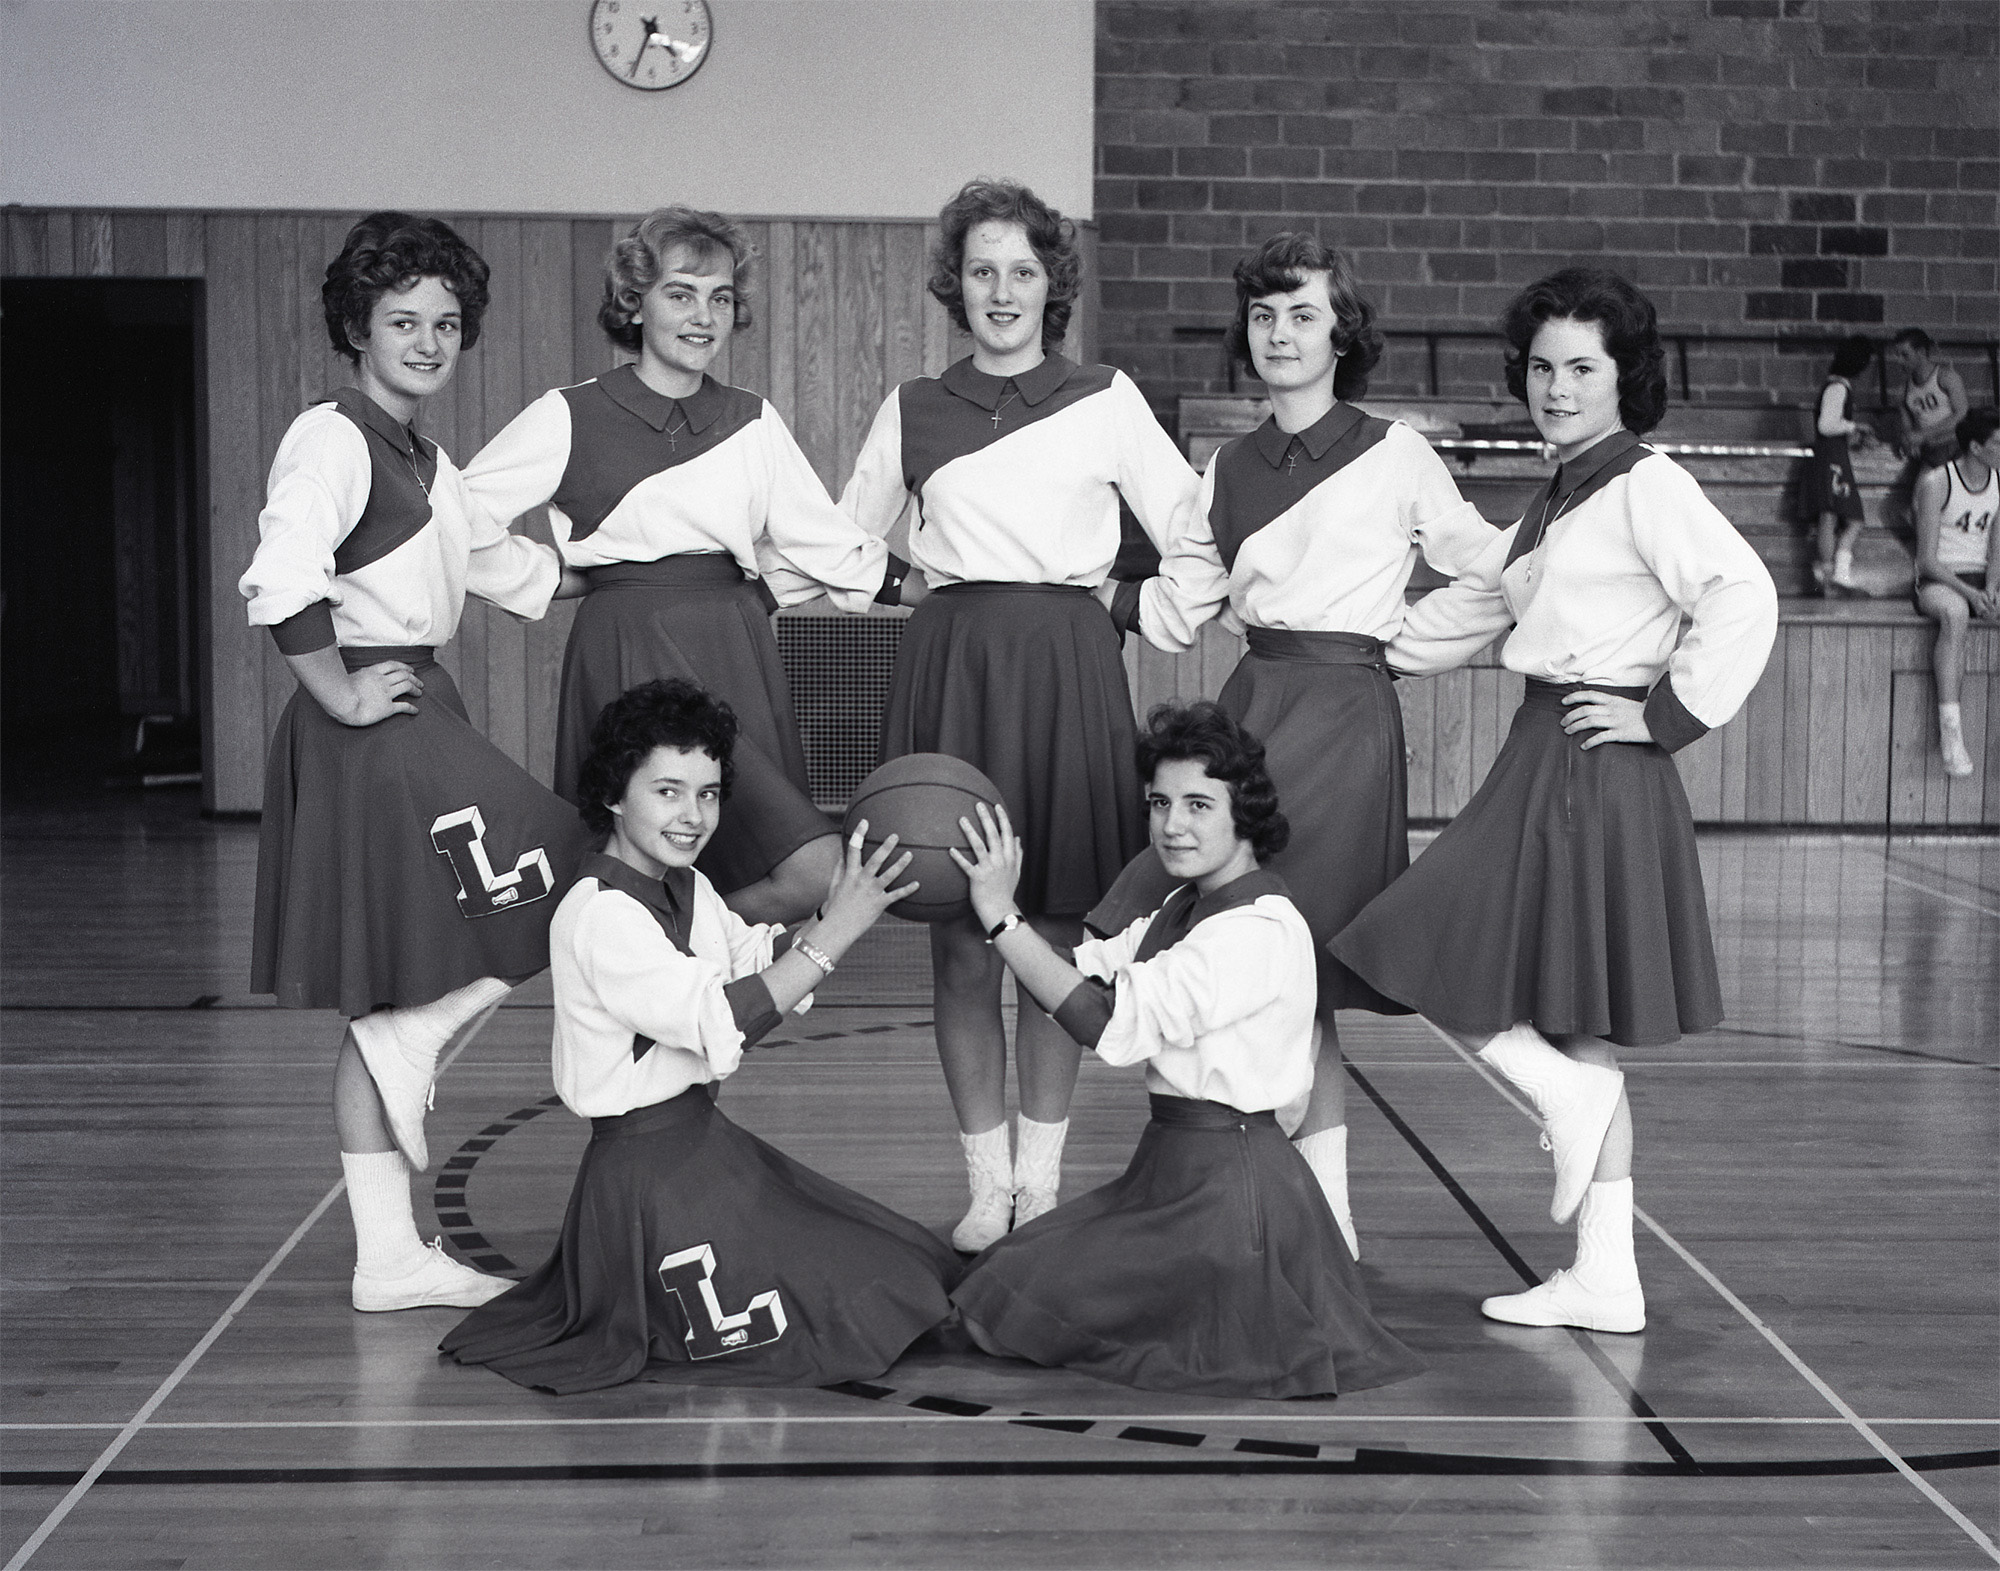 Cheerleaders from LaFargeville High School in LaFargeville, New York circa 1960. Medium format negative. View full size.